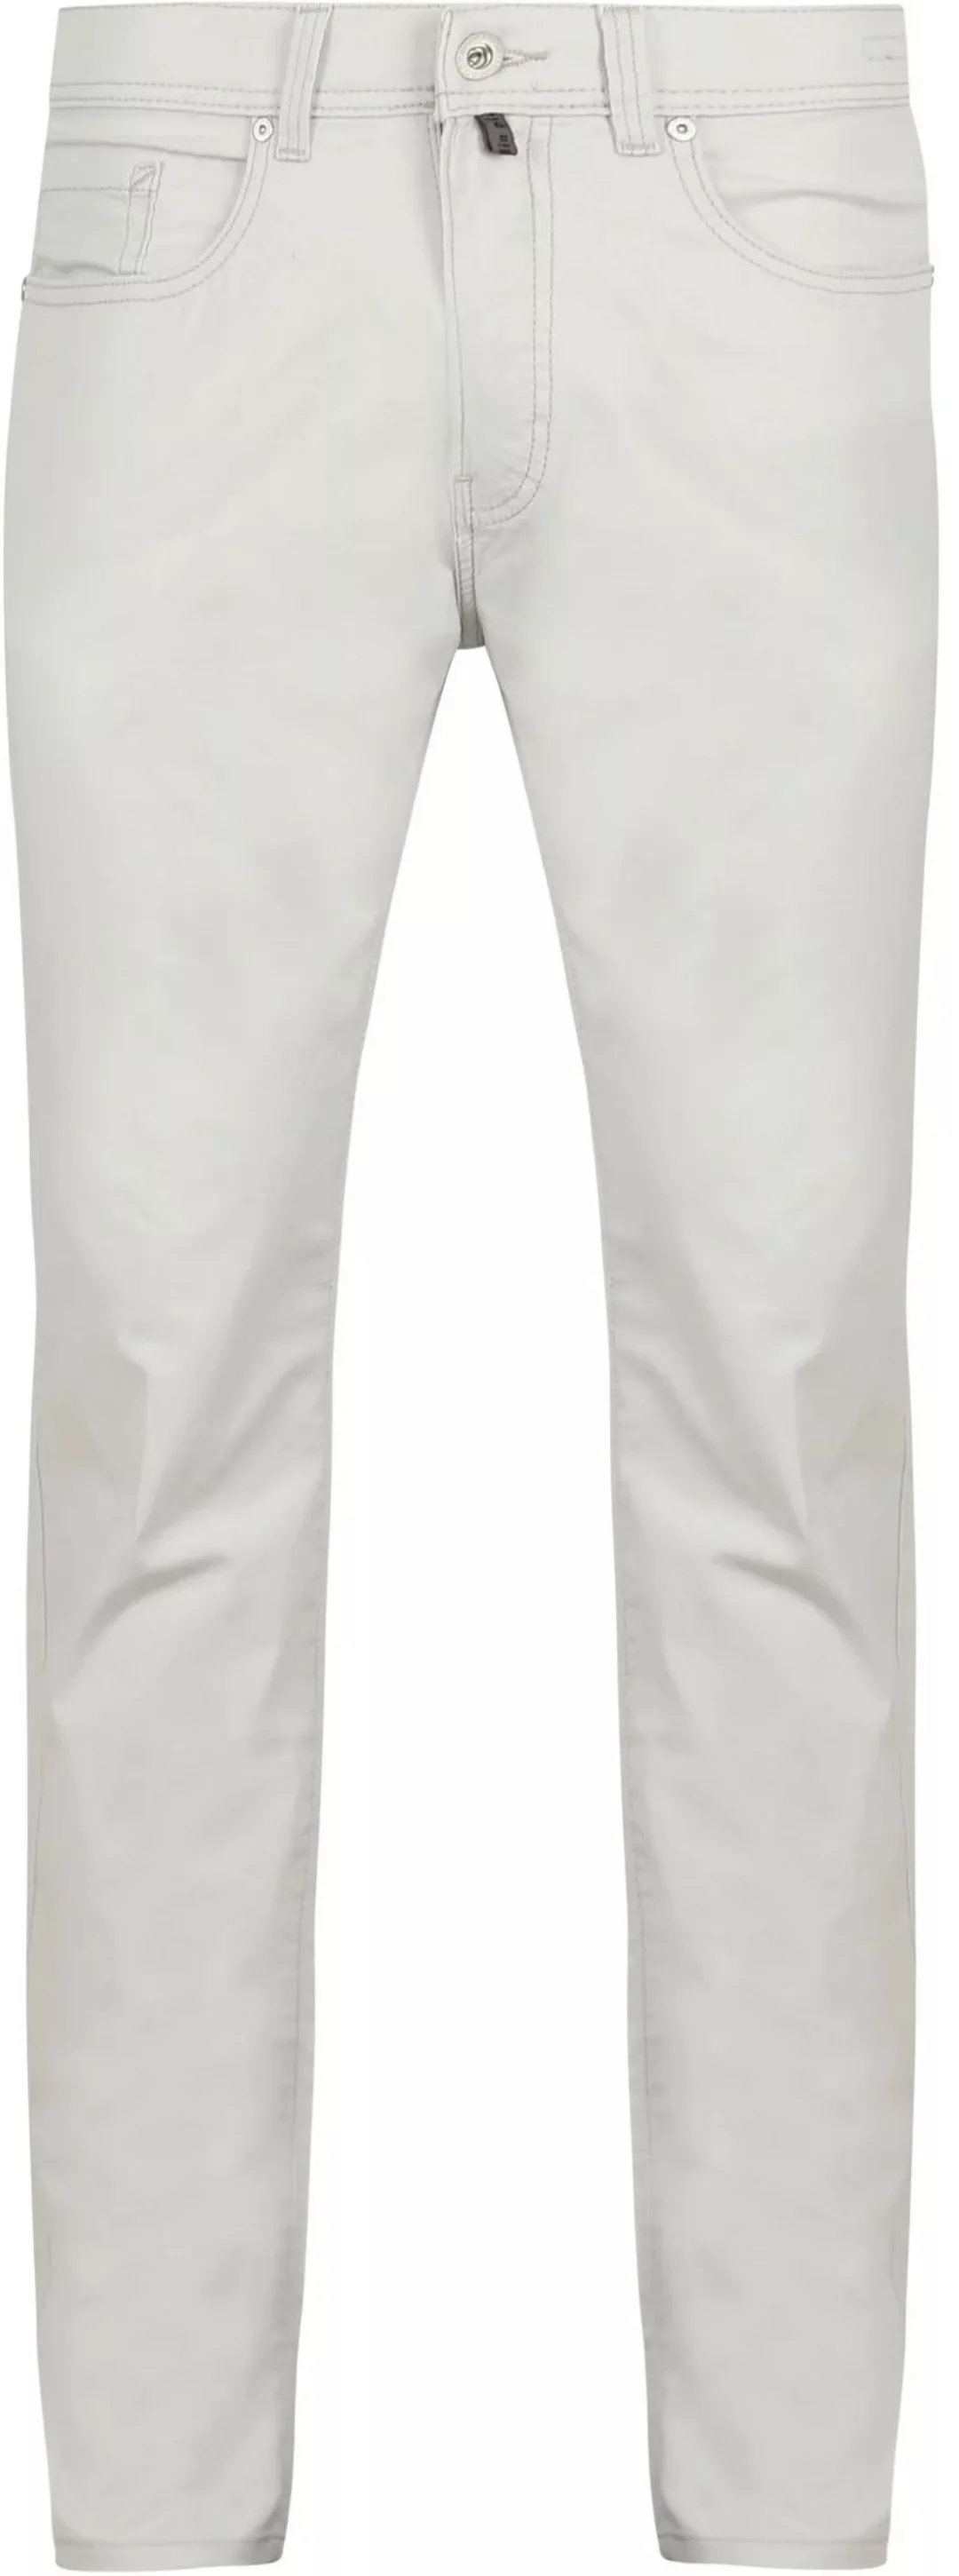 Pierre Cardin Trousers Lyon Tapered Hellgrau - Größe W 34 - L 34 günstig online kaufen